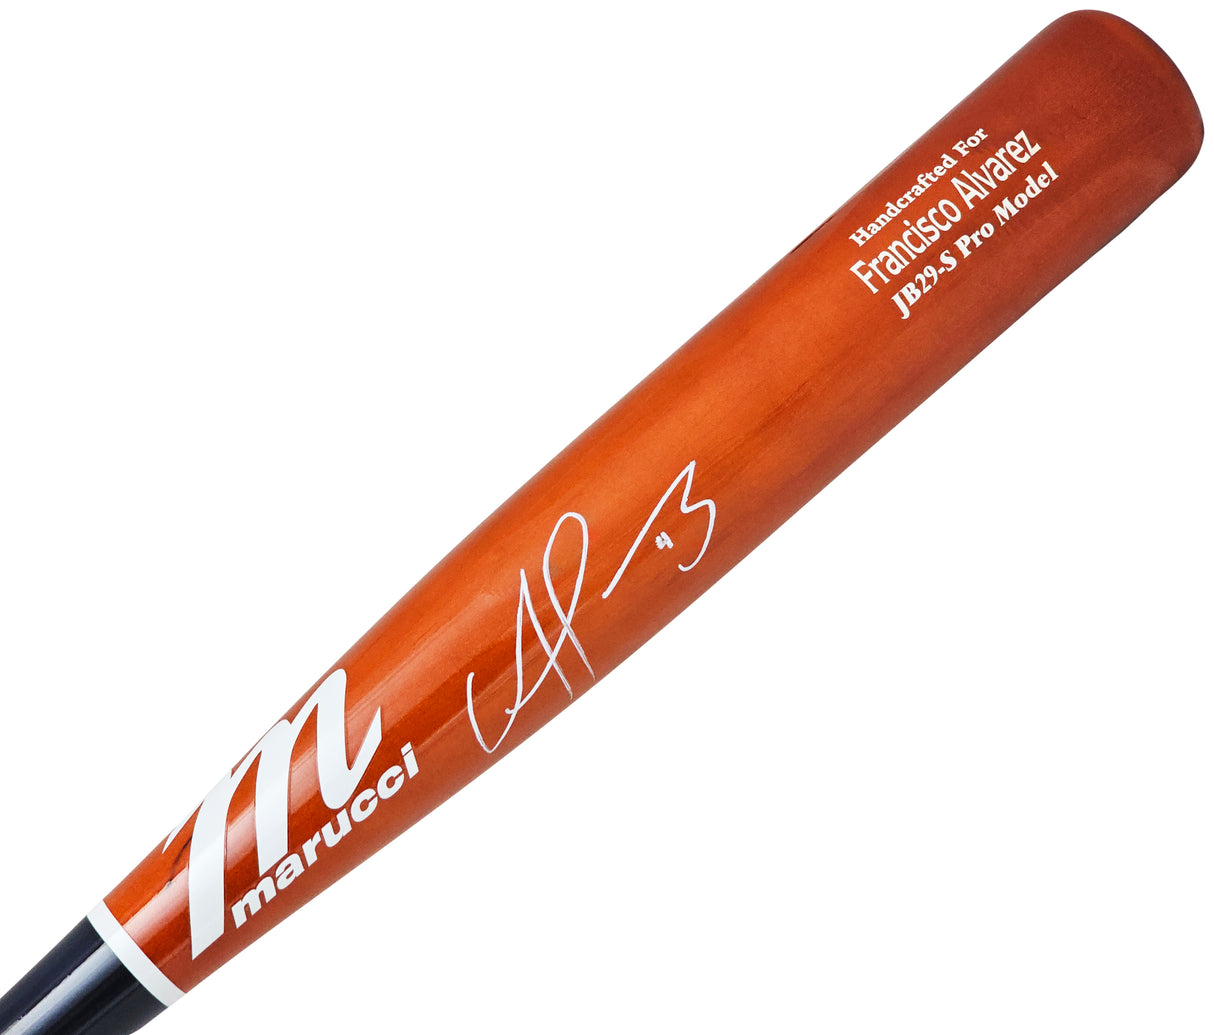 Francisco Alvarez Autographed Orange/Blue Marucci Pro Model Bat New York Mets Beckett BAS Witness Stock #218048